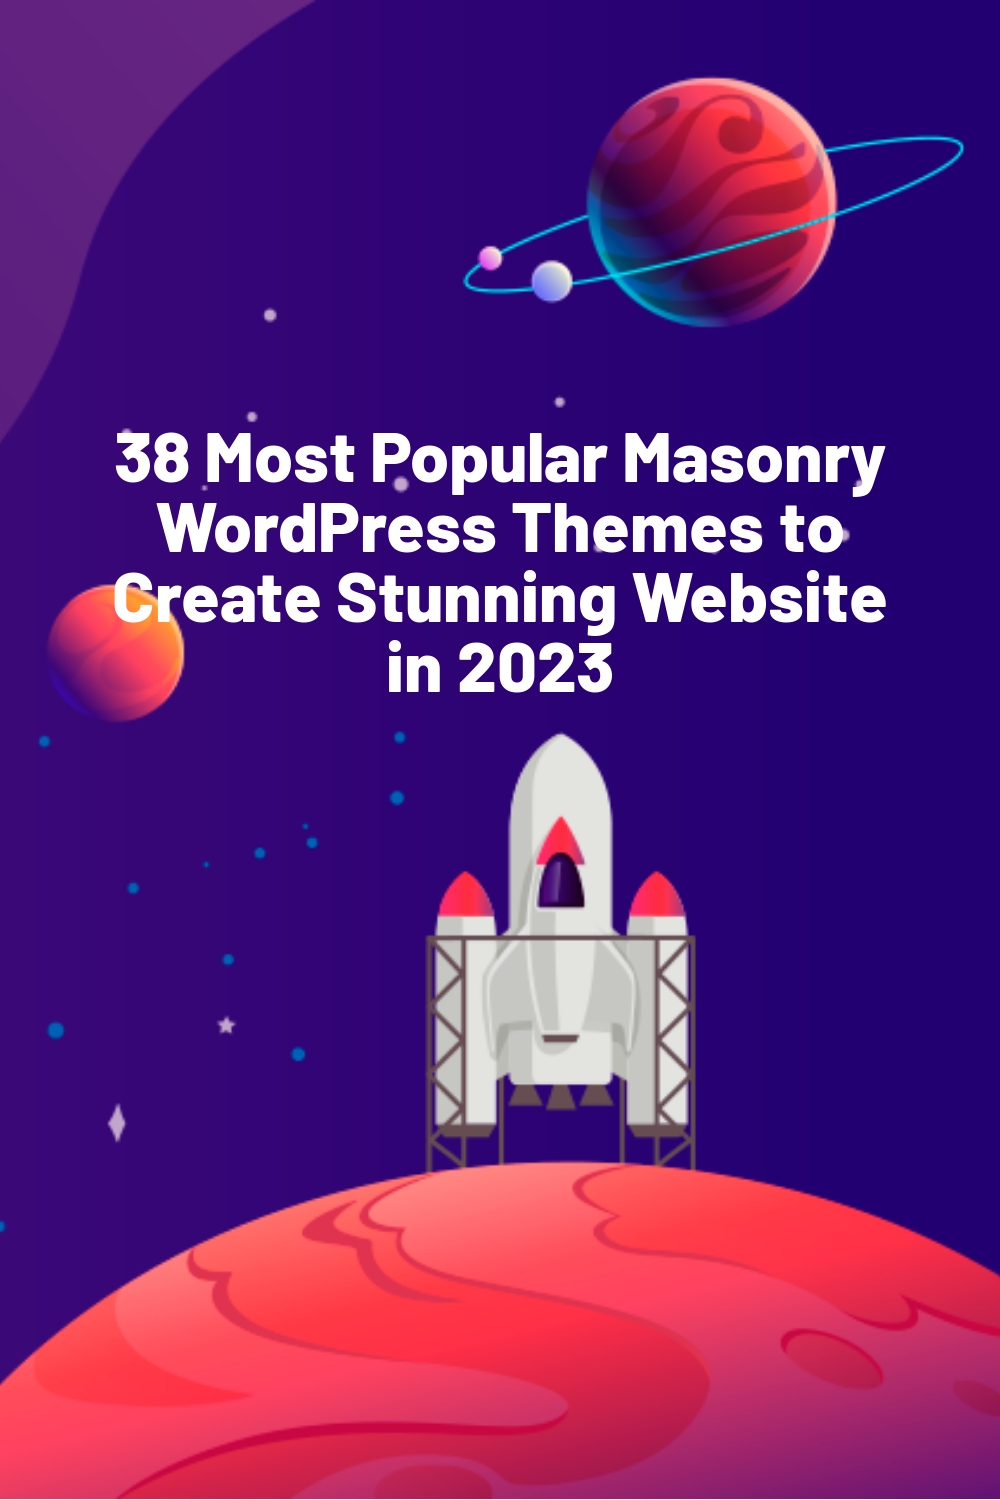 38 Most Popular Masonry WordPress Themes to Create Stunning Website in 2023